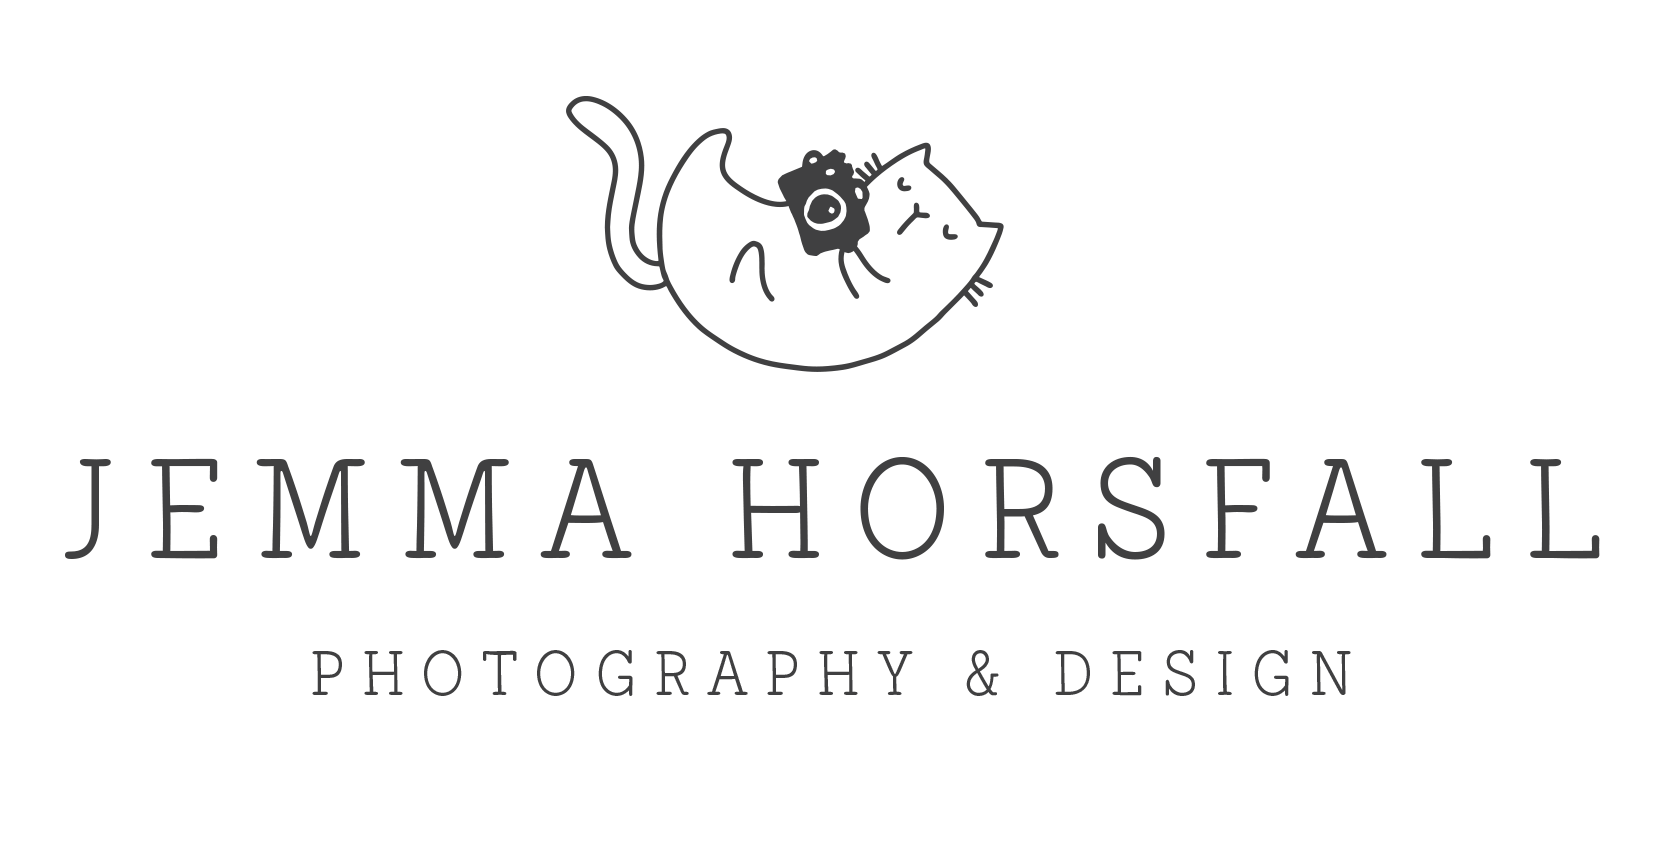 Jemma Horsfall | Photography & Design